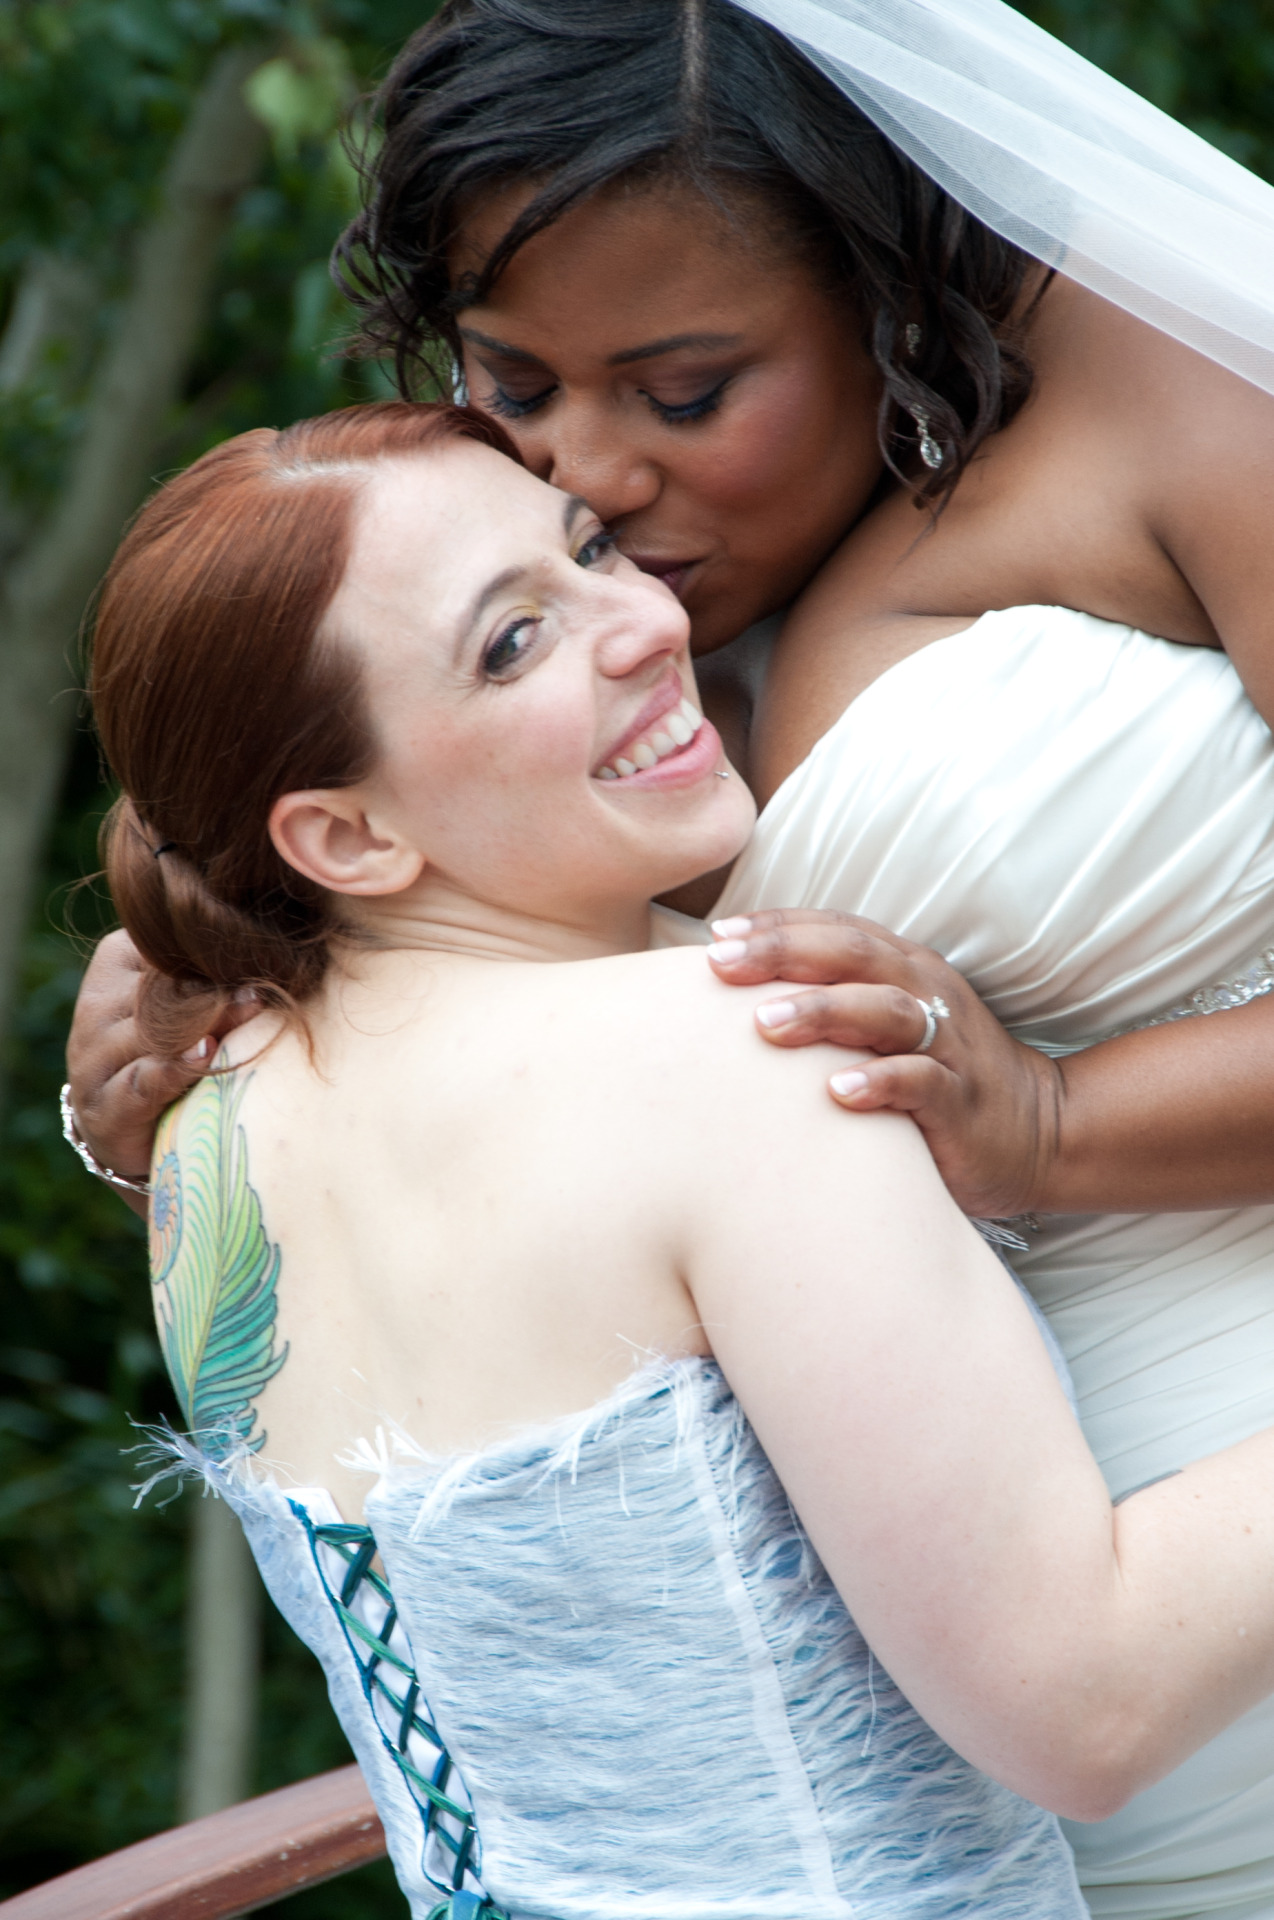 mylesbianwedding:  weddingprideny:  A New York lesbian couples has a peacock-themed